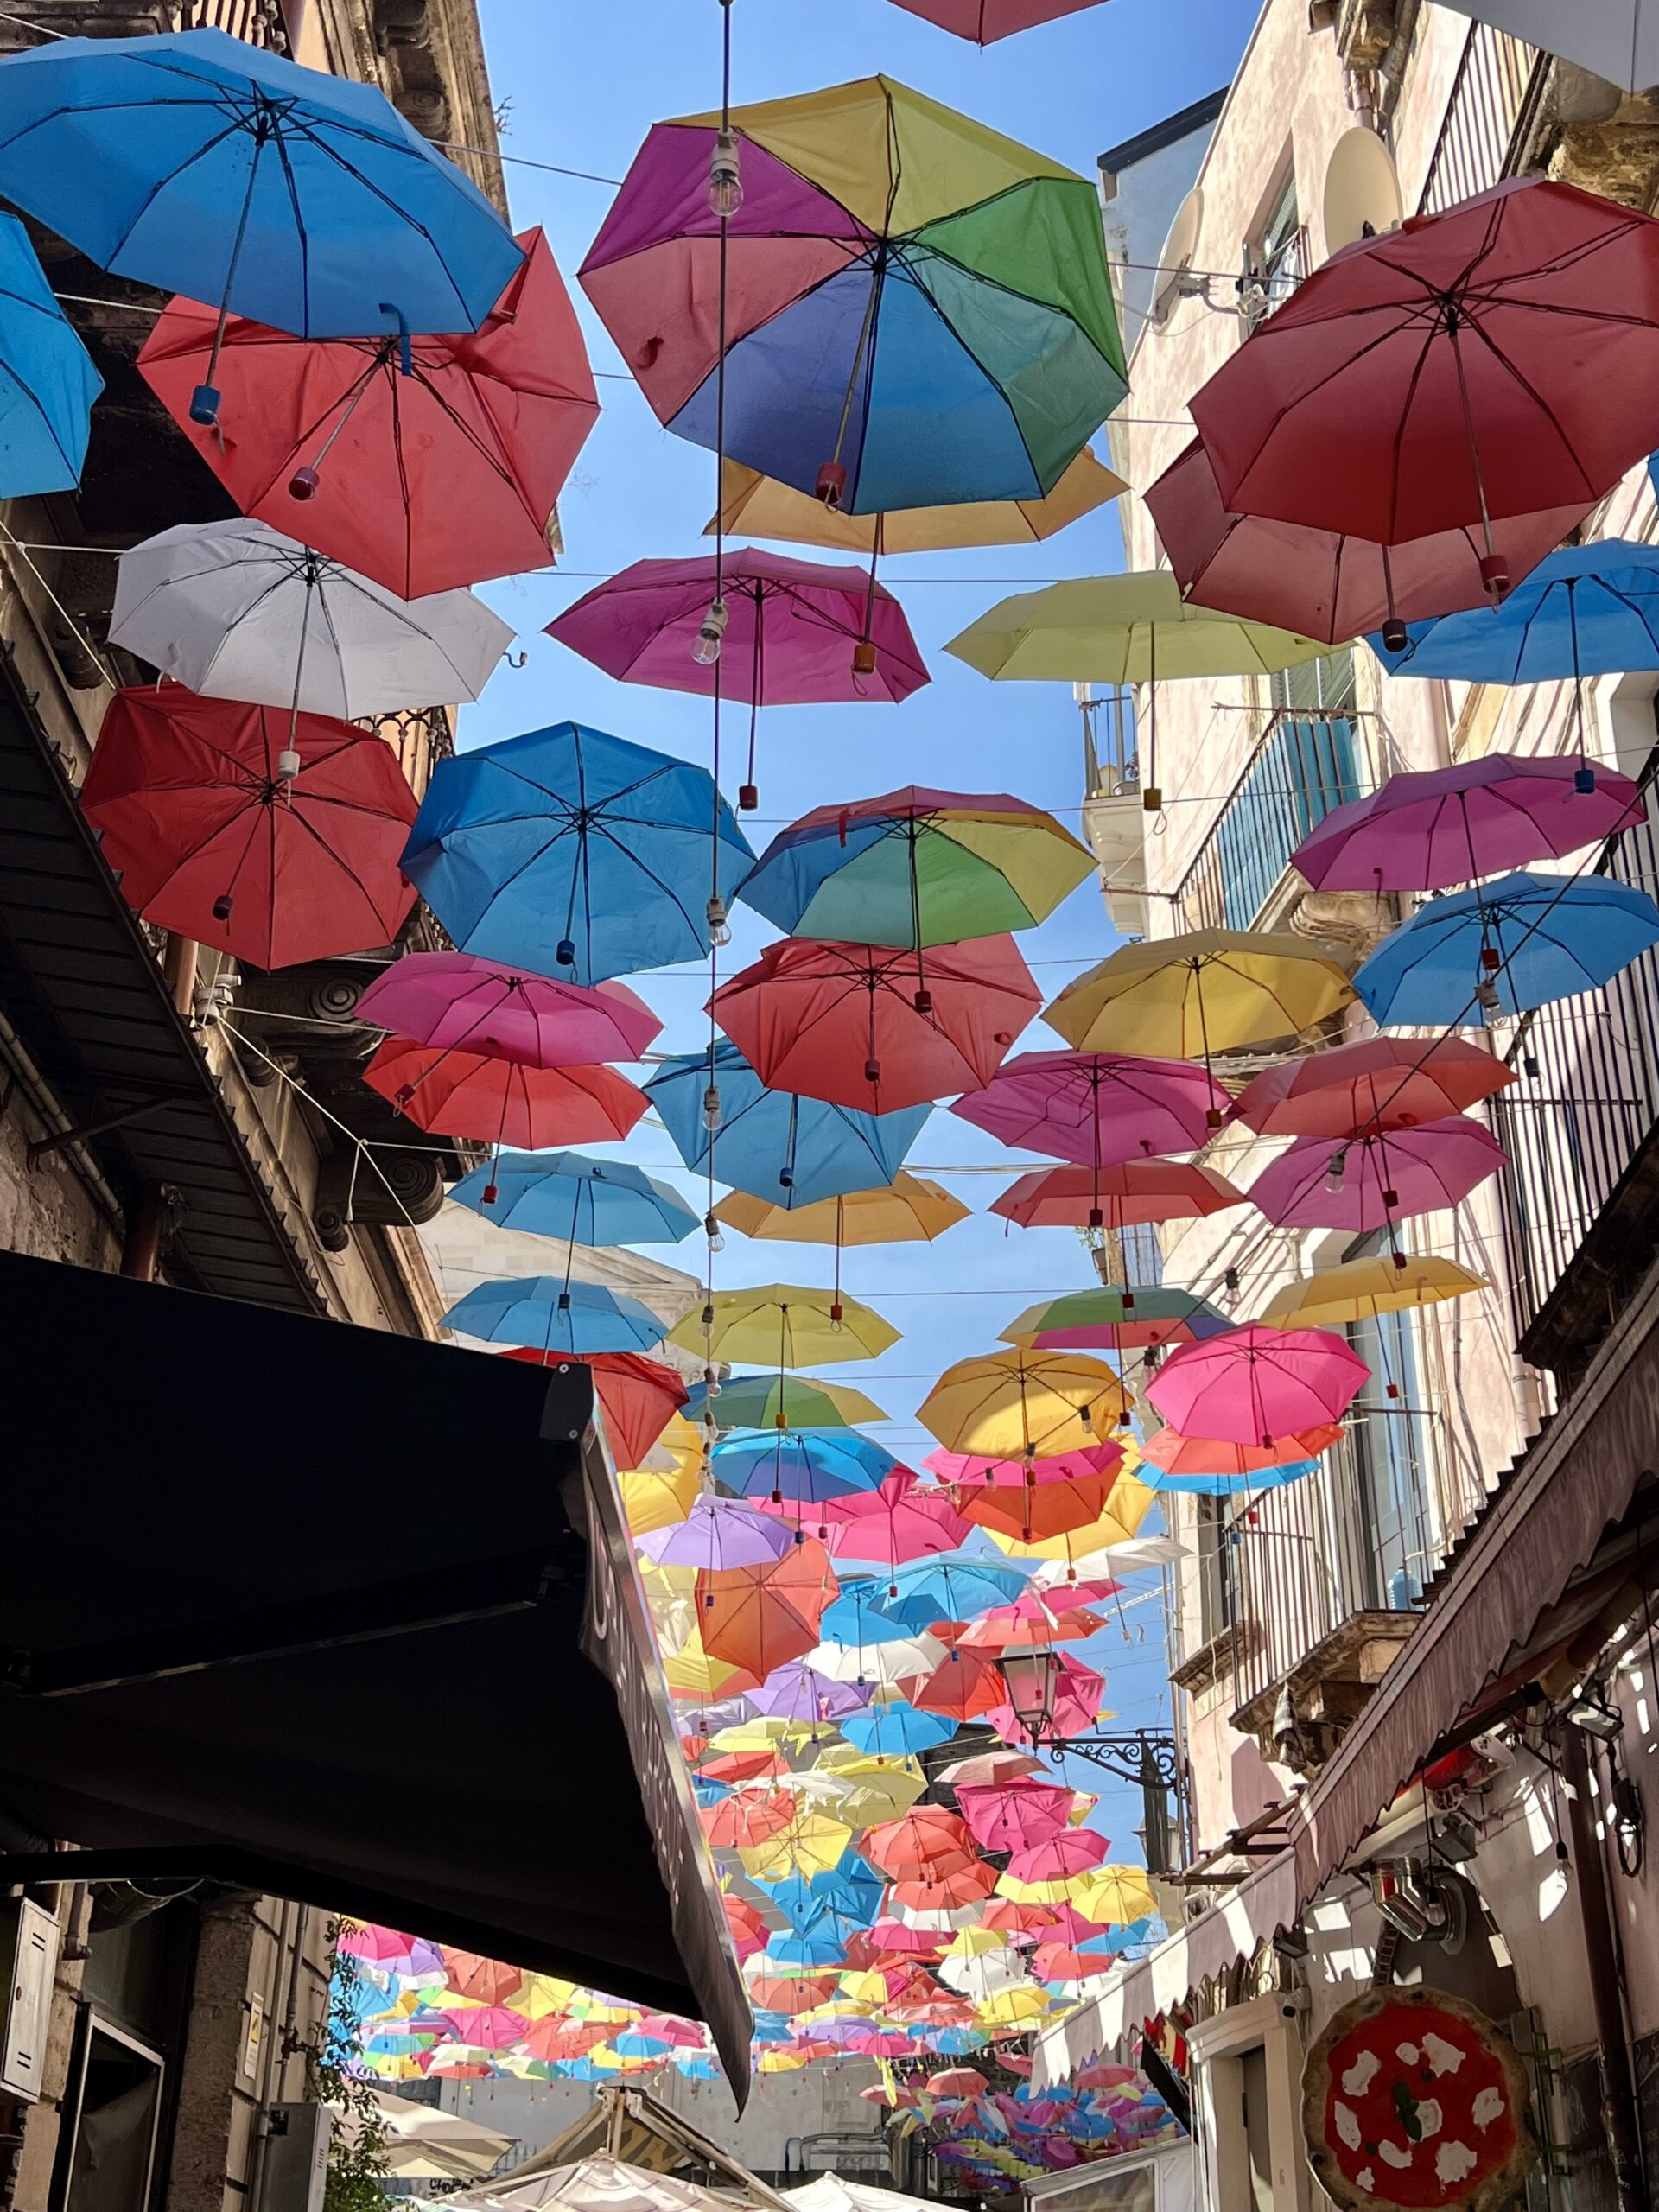 umbrellas covering the fish market